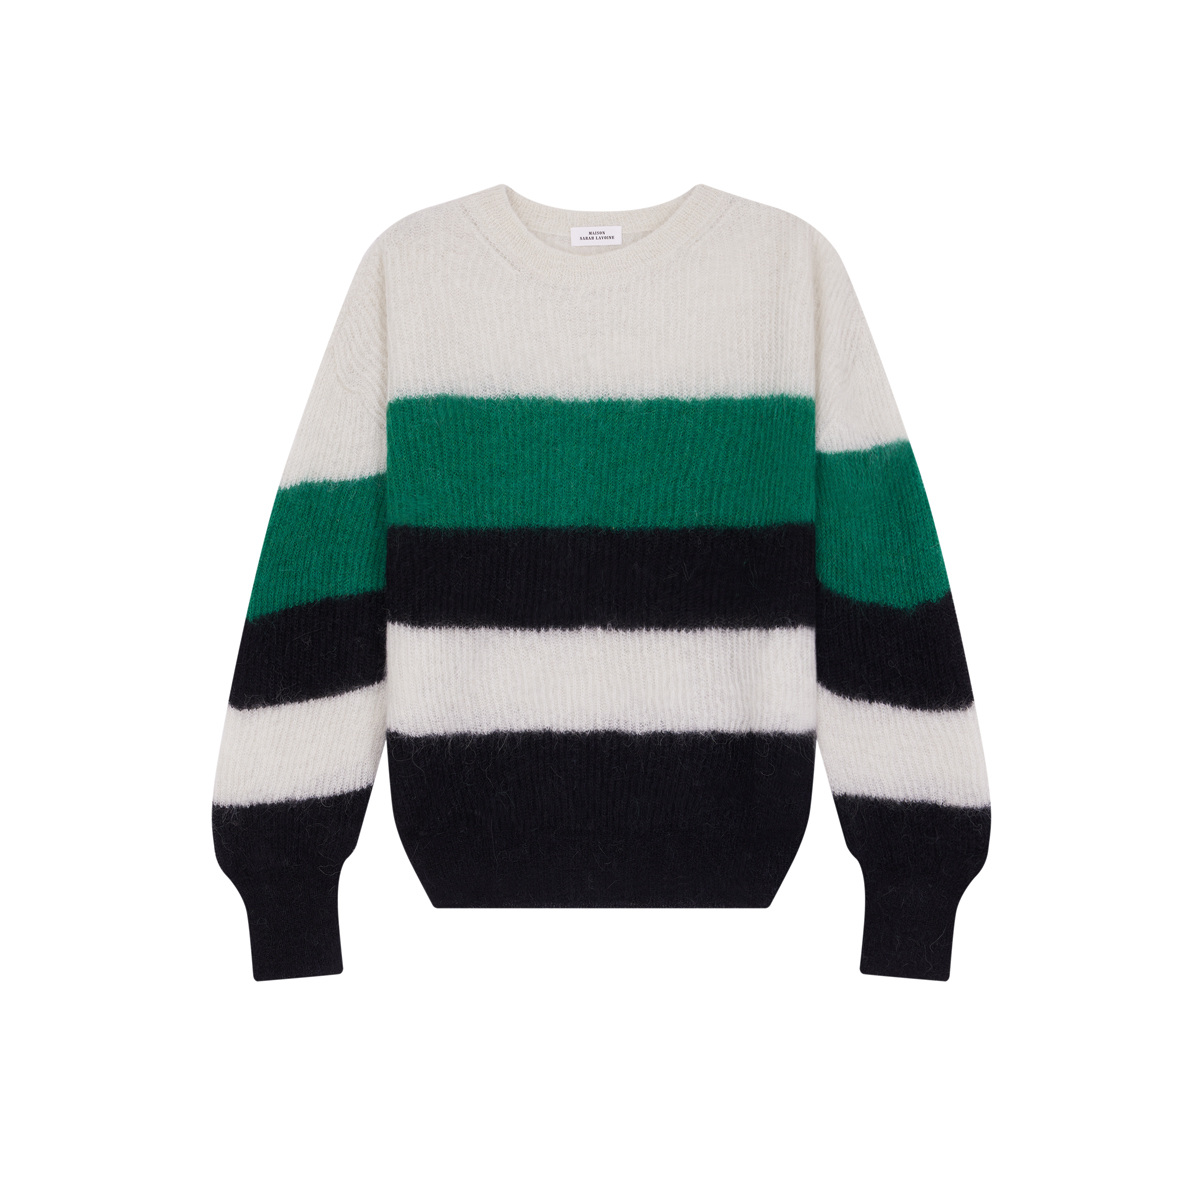 Mohair sweater Torino, Ecru, Green and Black - image 1